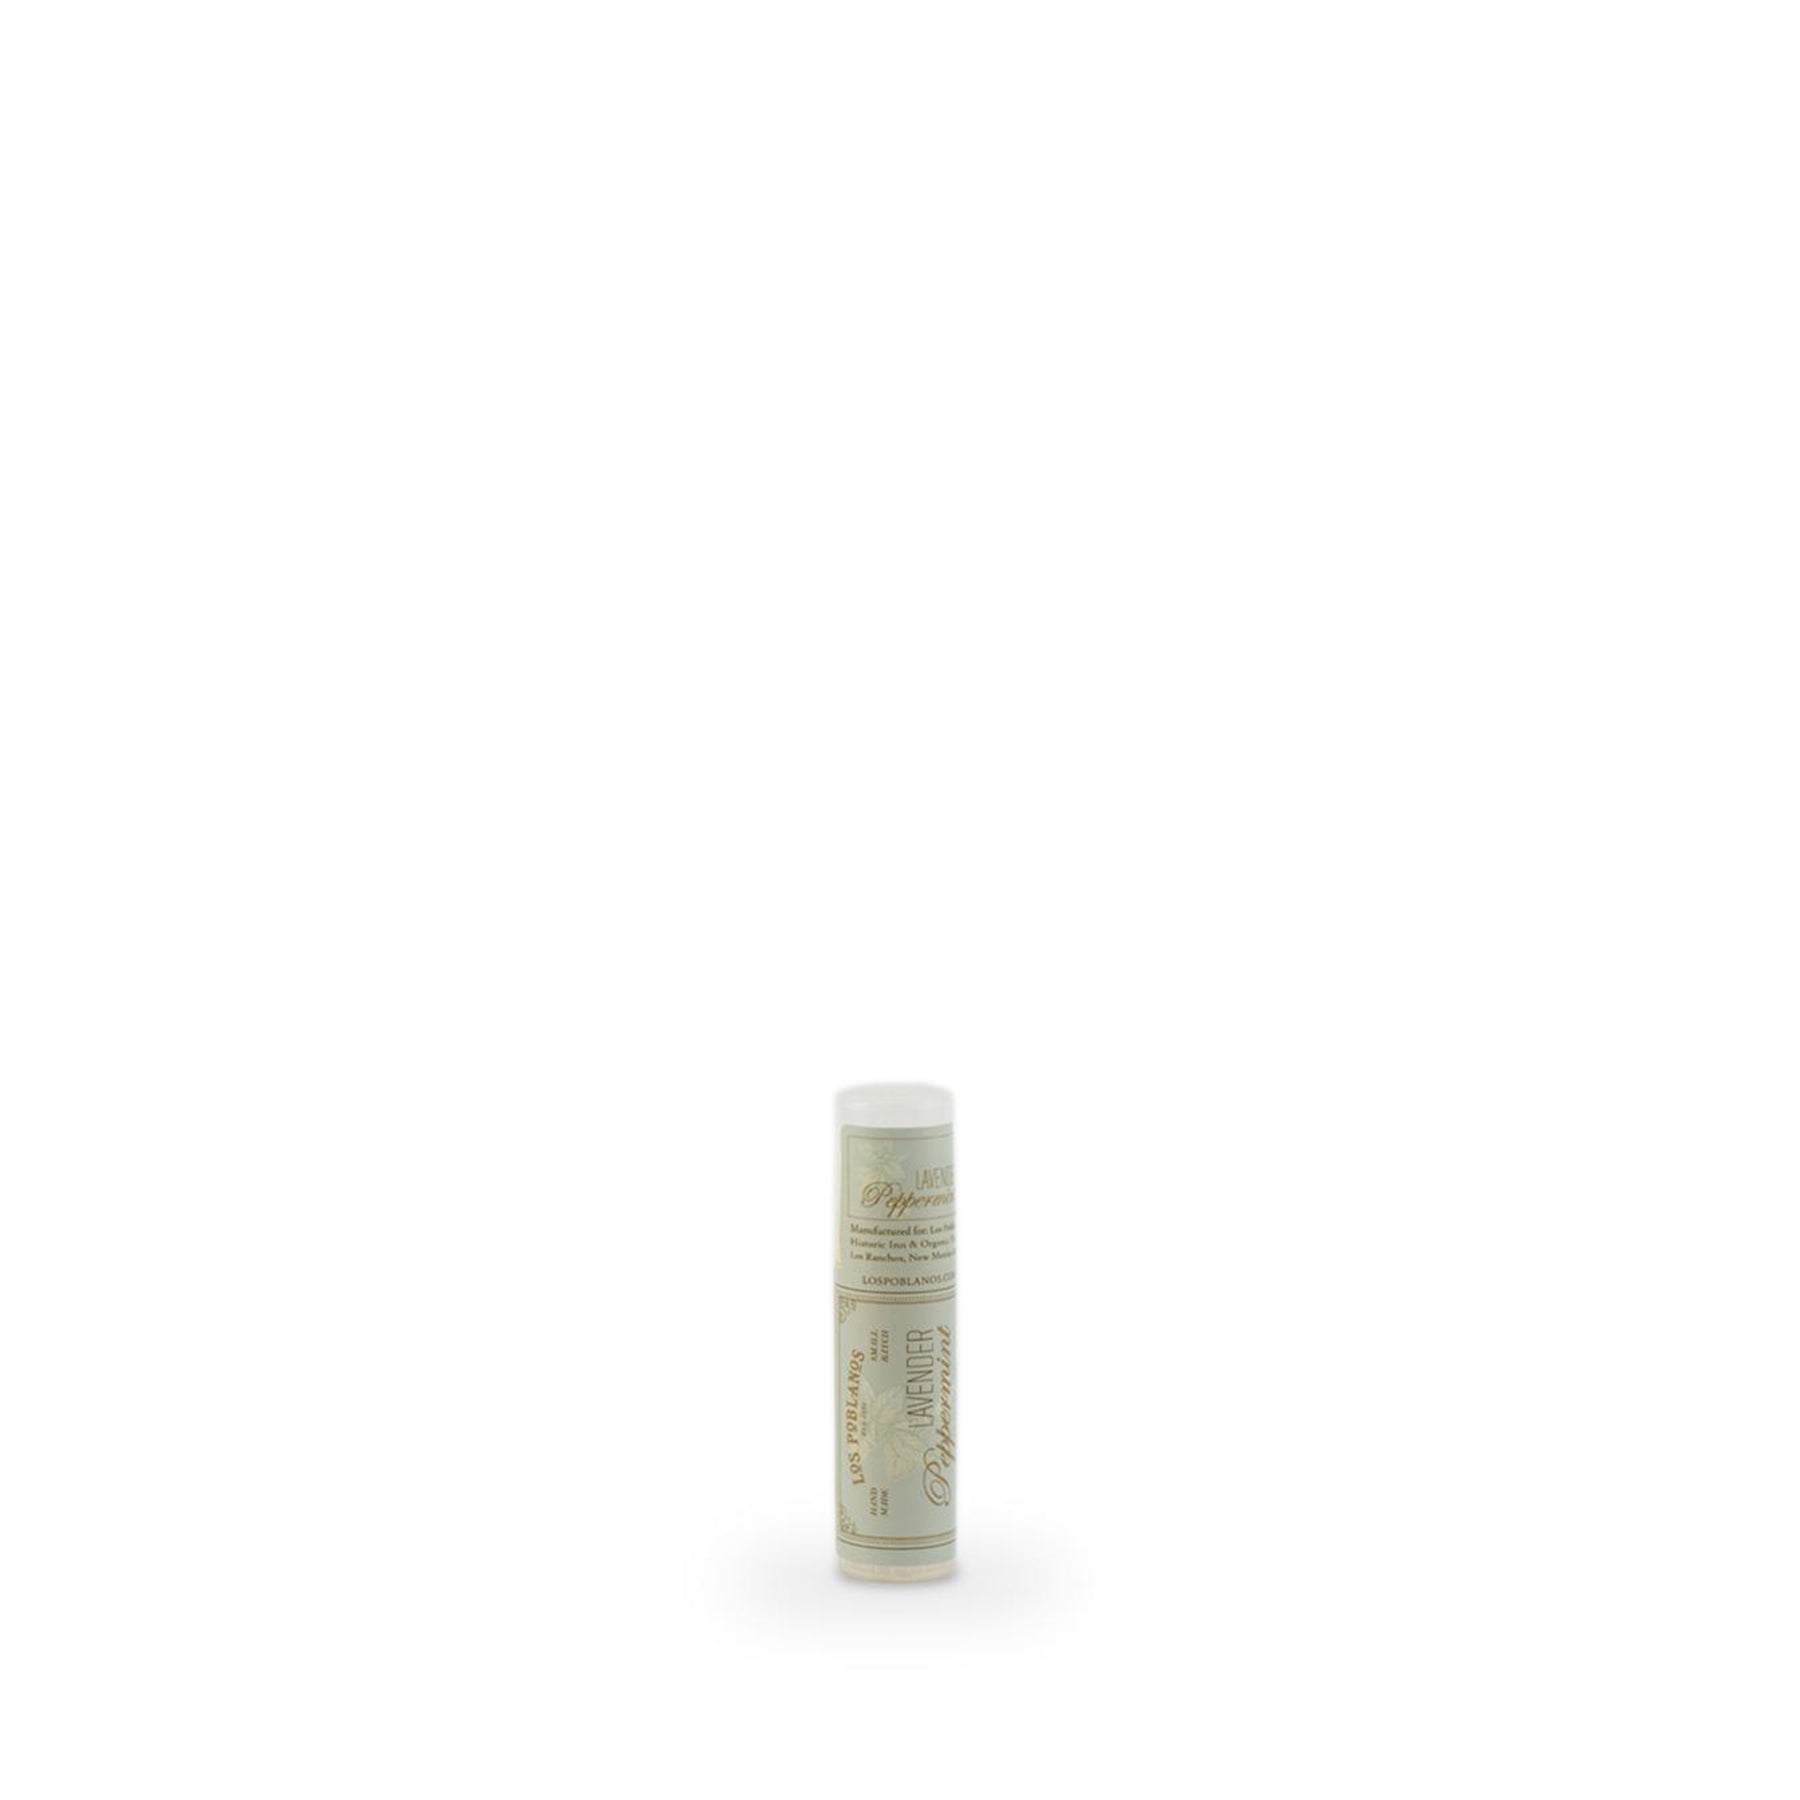 Lavender Peppermint Lip Balm Zoom Image 1